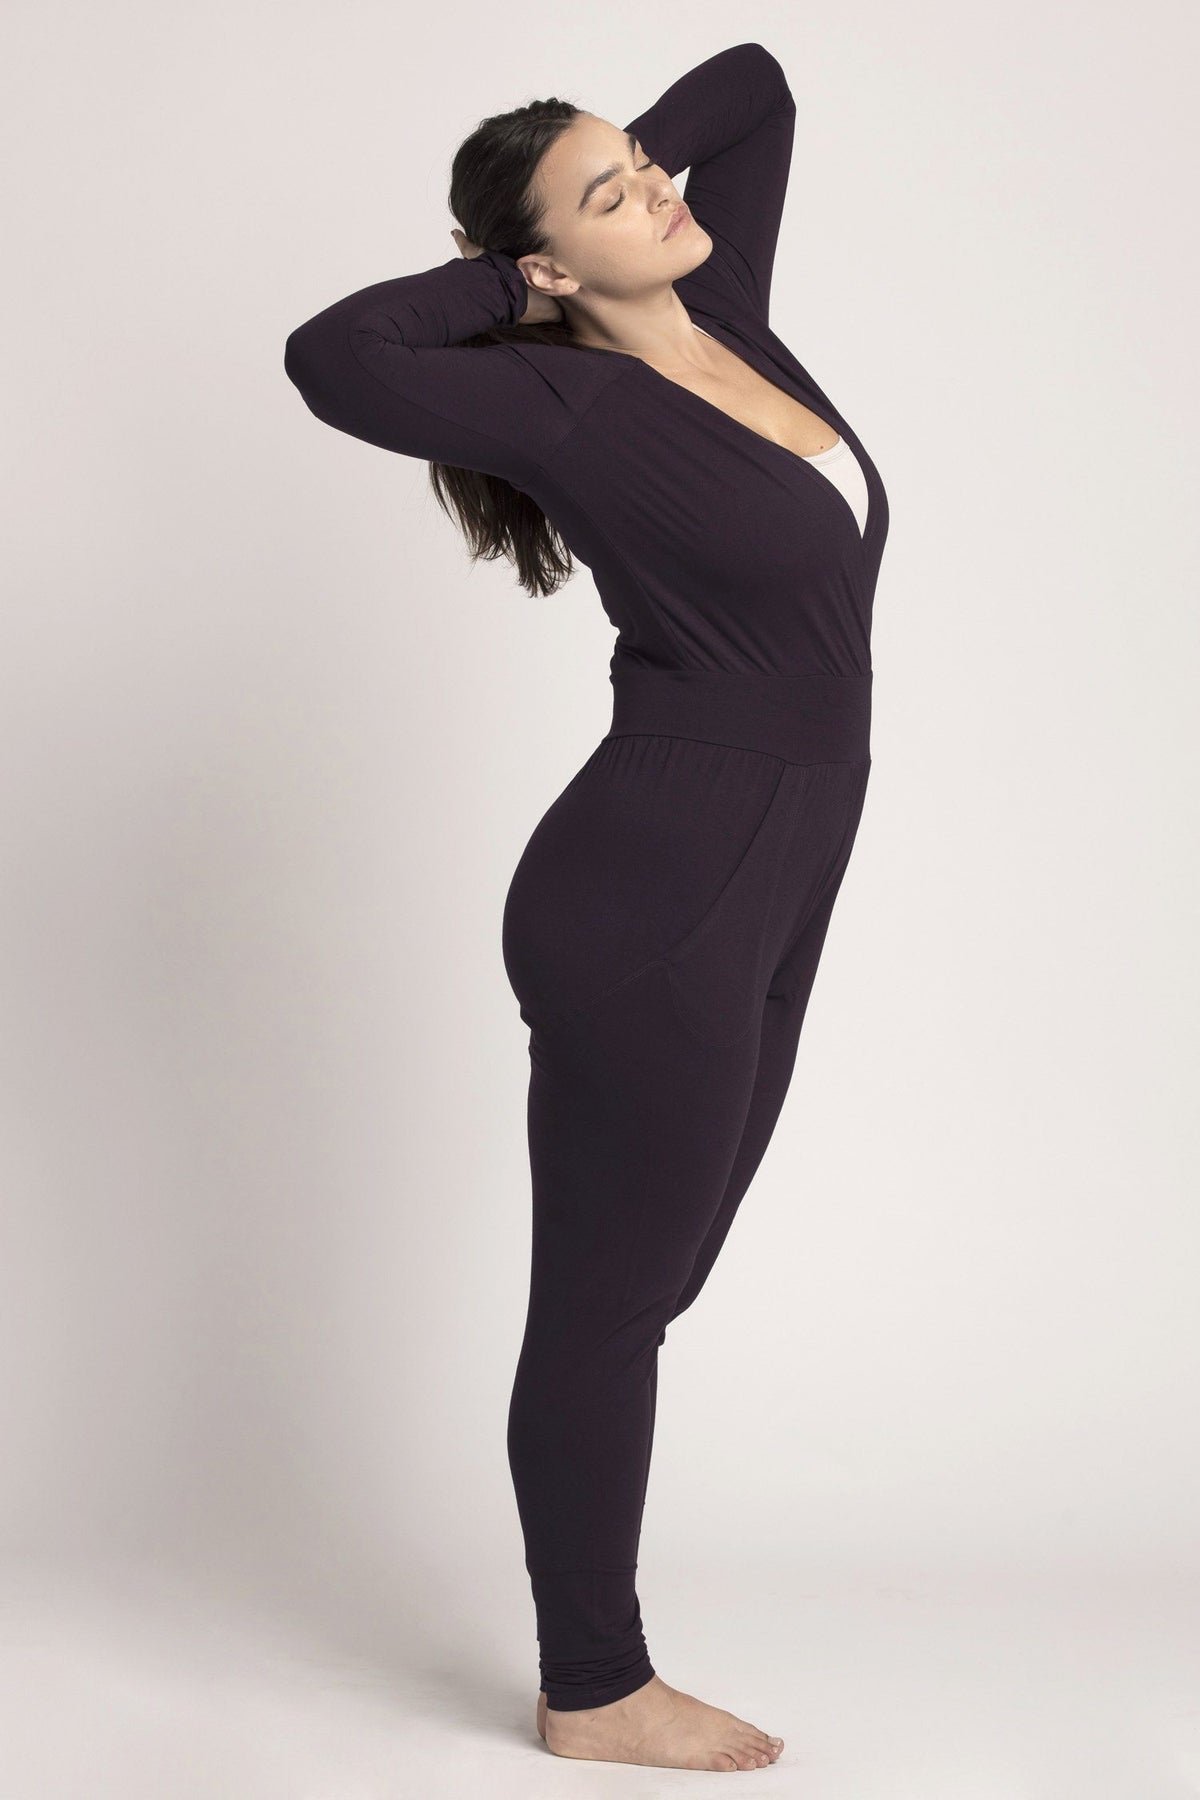 Long Sleeve Yoga Jumpsuit womens clothing Ripple Yoga Wear eggplant XS 